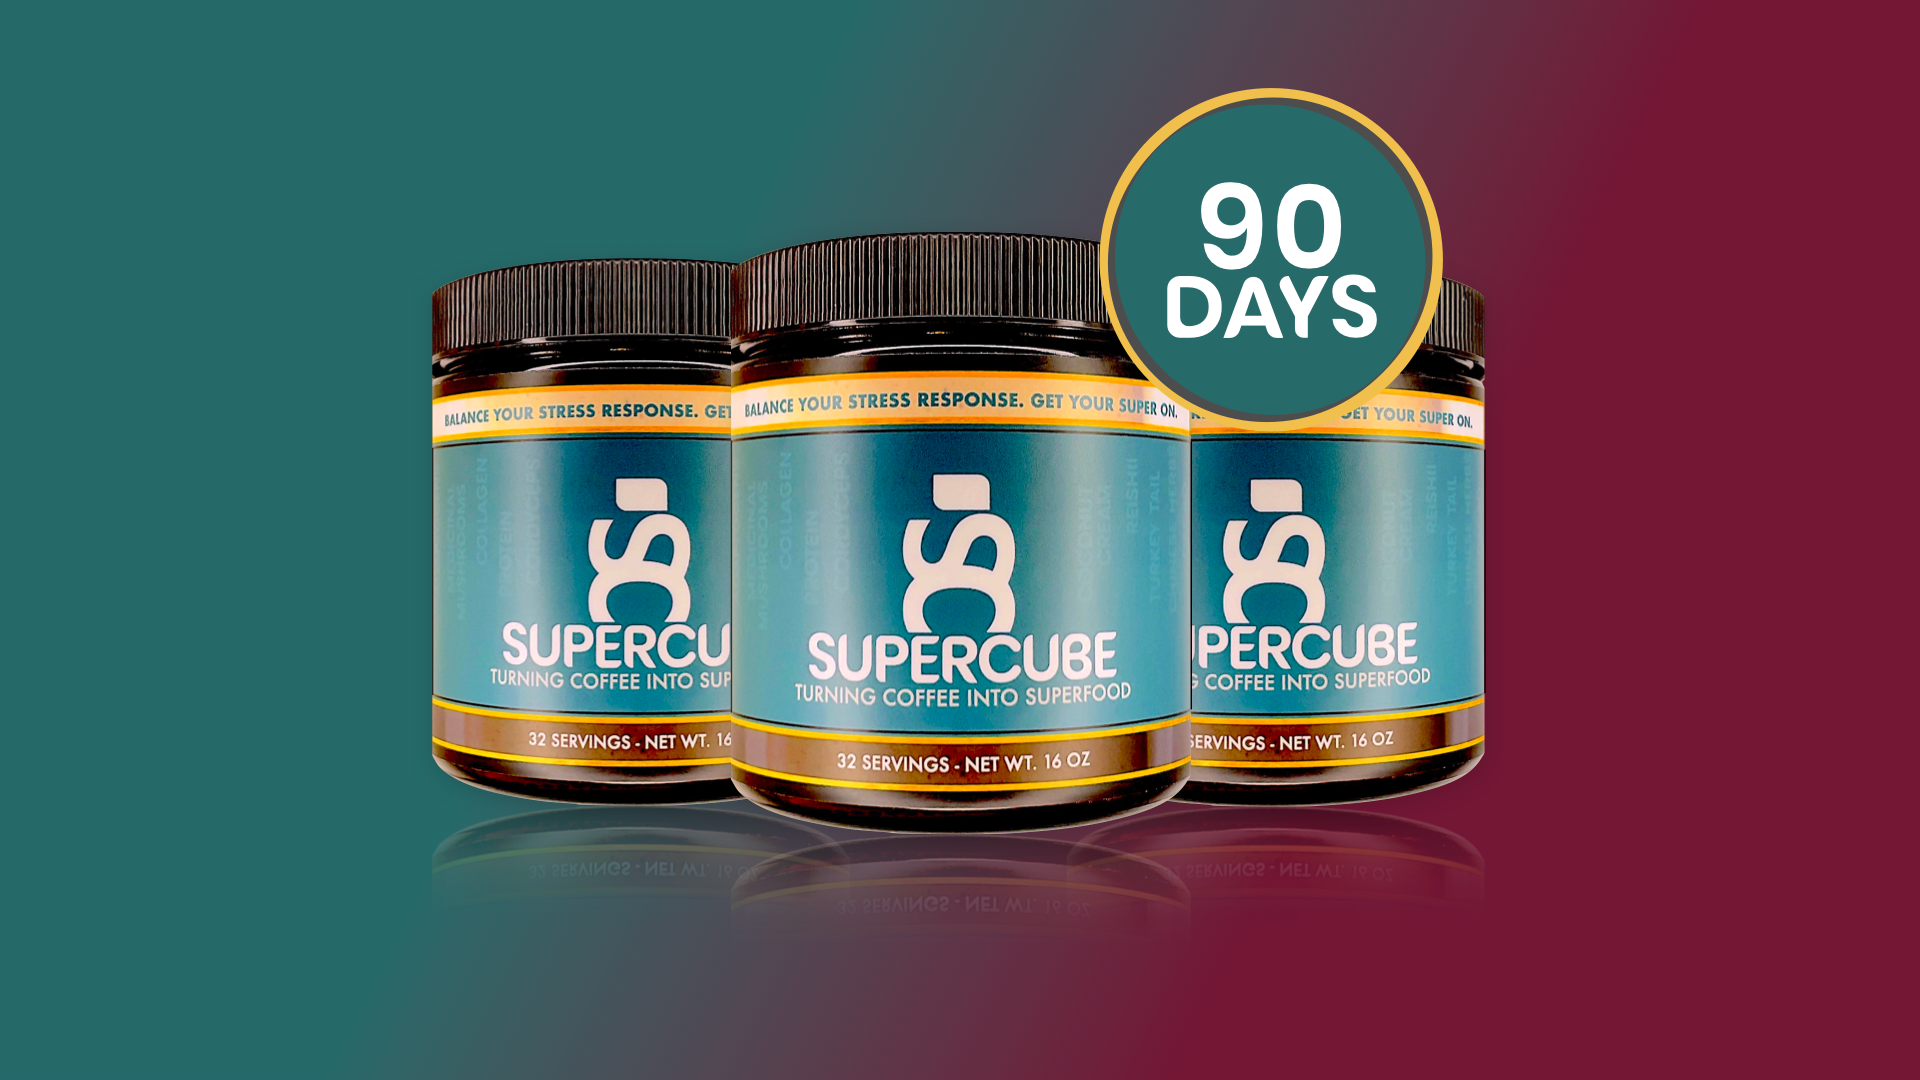 SUPERCUBE - 90 DAYS